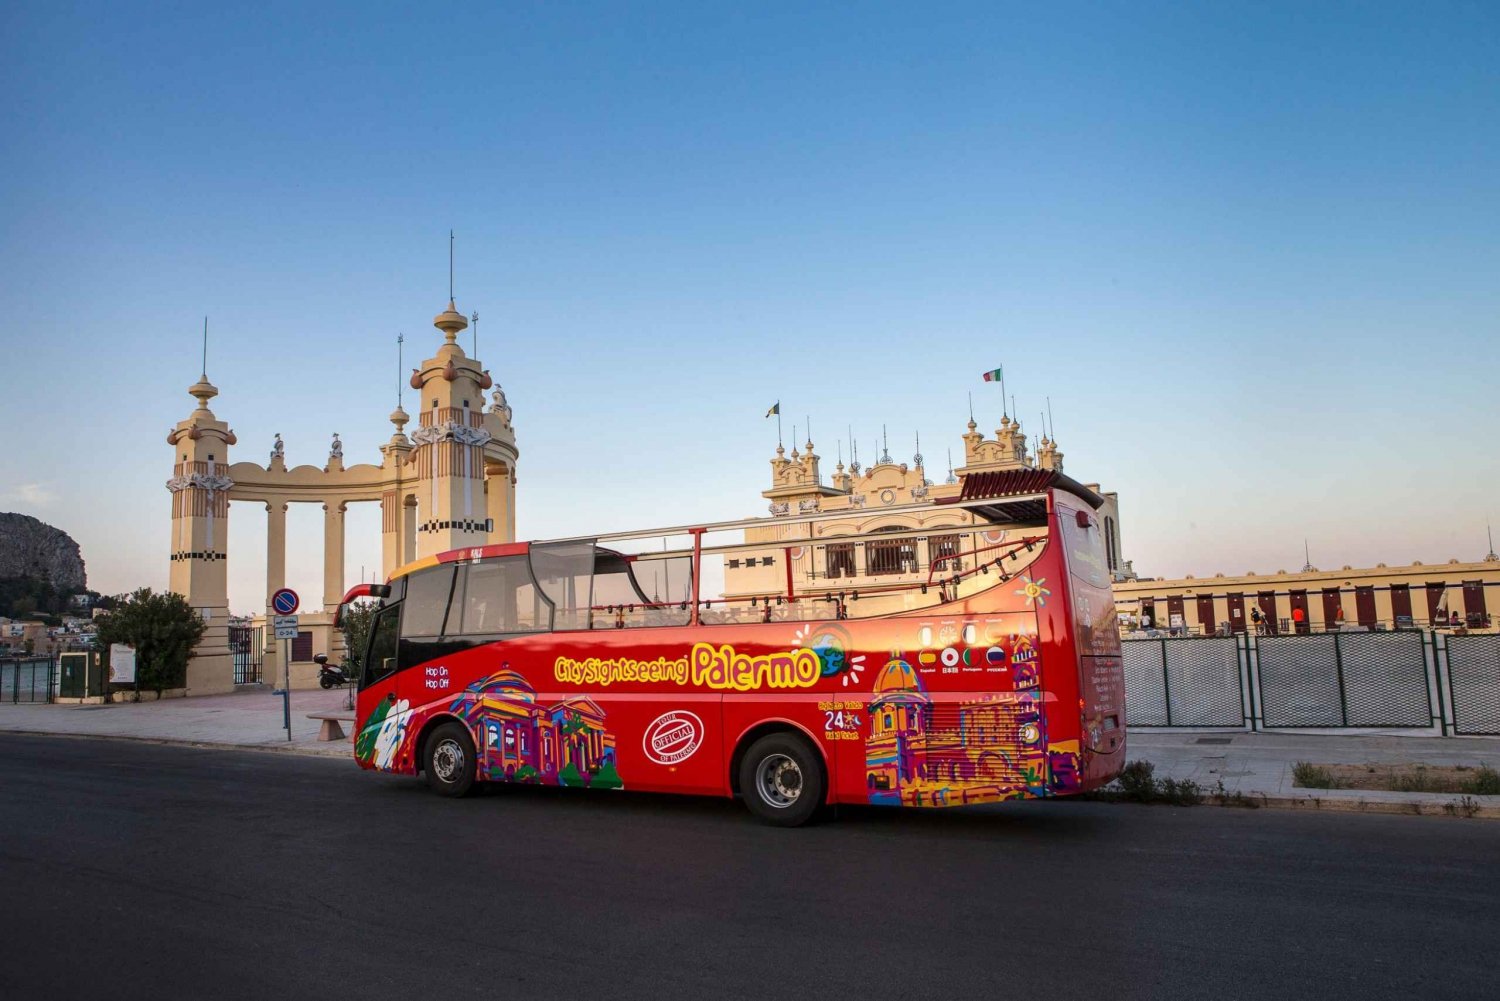 Palermo: Hop-on Hop-off Bus Tour 24-hour Ticket